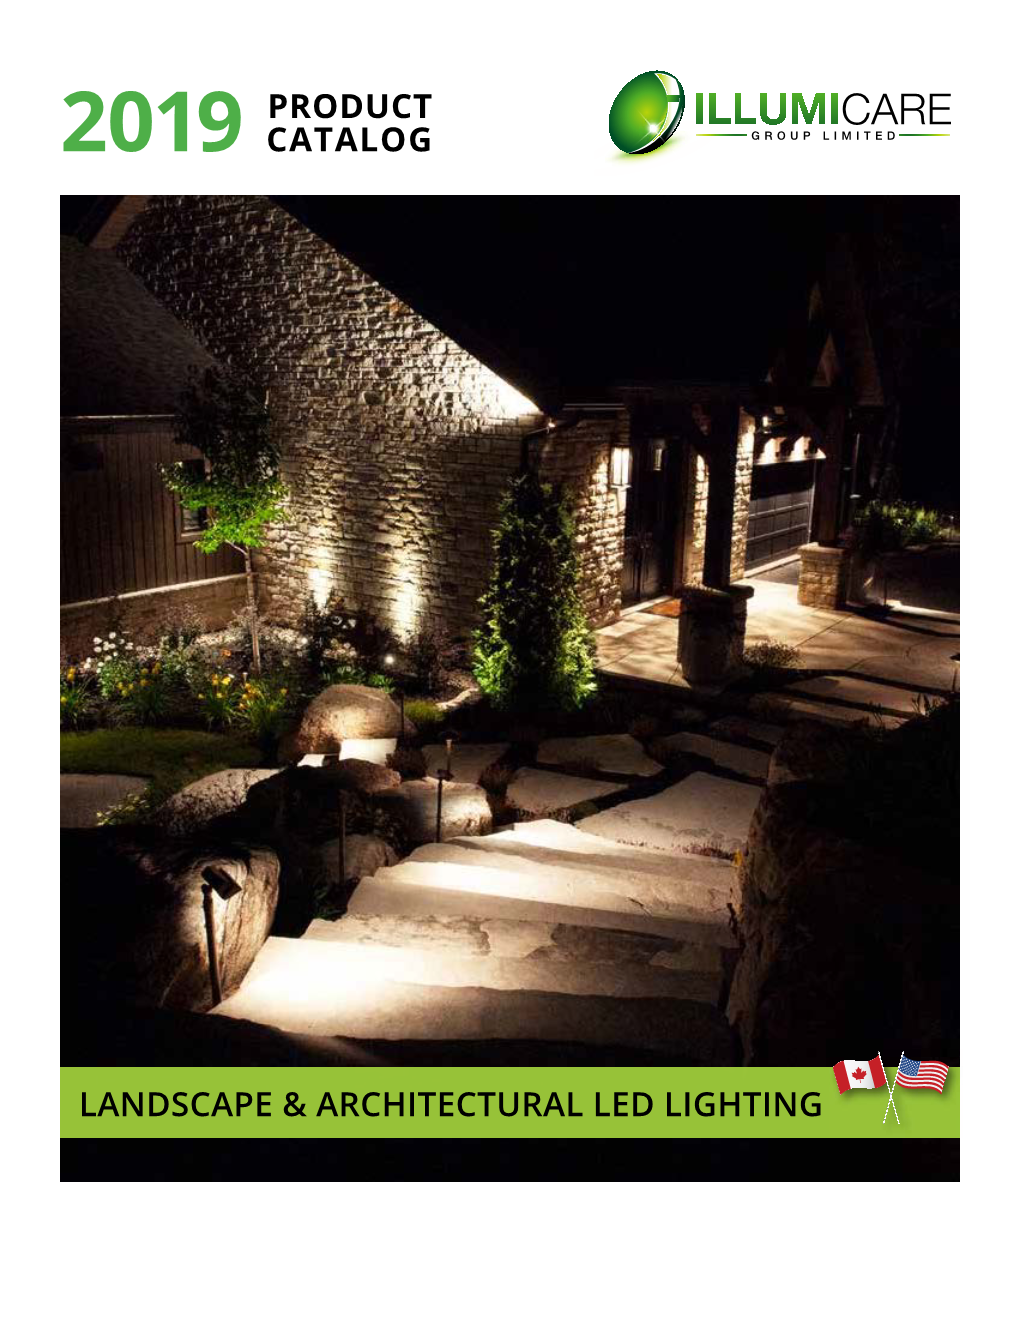 Product Catalog Landscape & Architectural Led Lighting